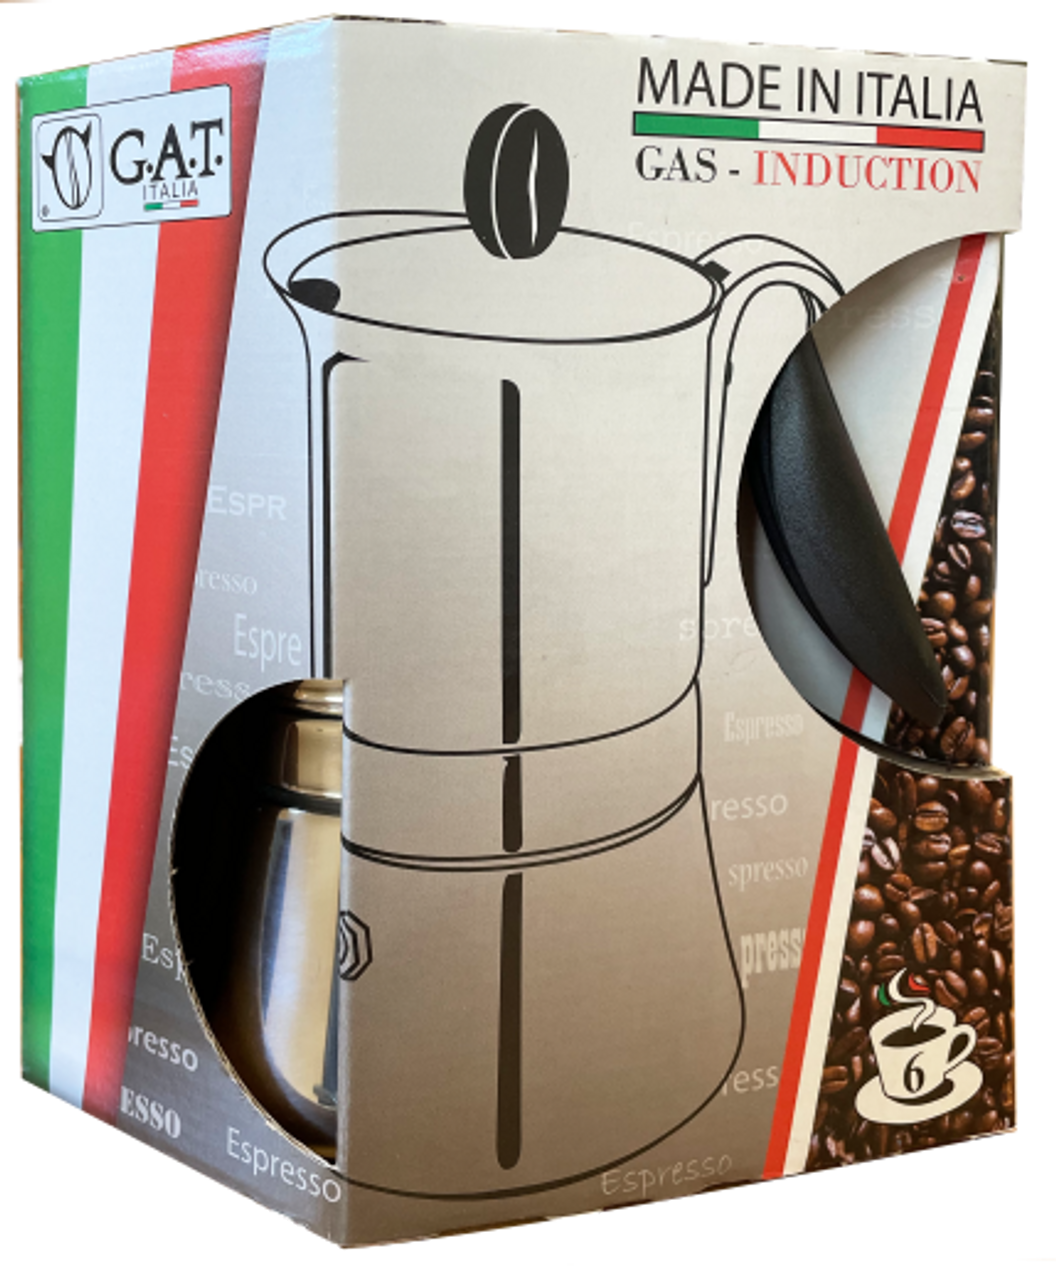 COPOTEA Moka Pot Induction Stovetop Espresso Maker, Borosilicate Glass &  Stainless Steel Moka Pot, 240 ml/8.5 oz/6 Espresso Cup for Strong Coffee